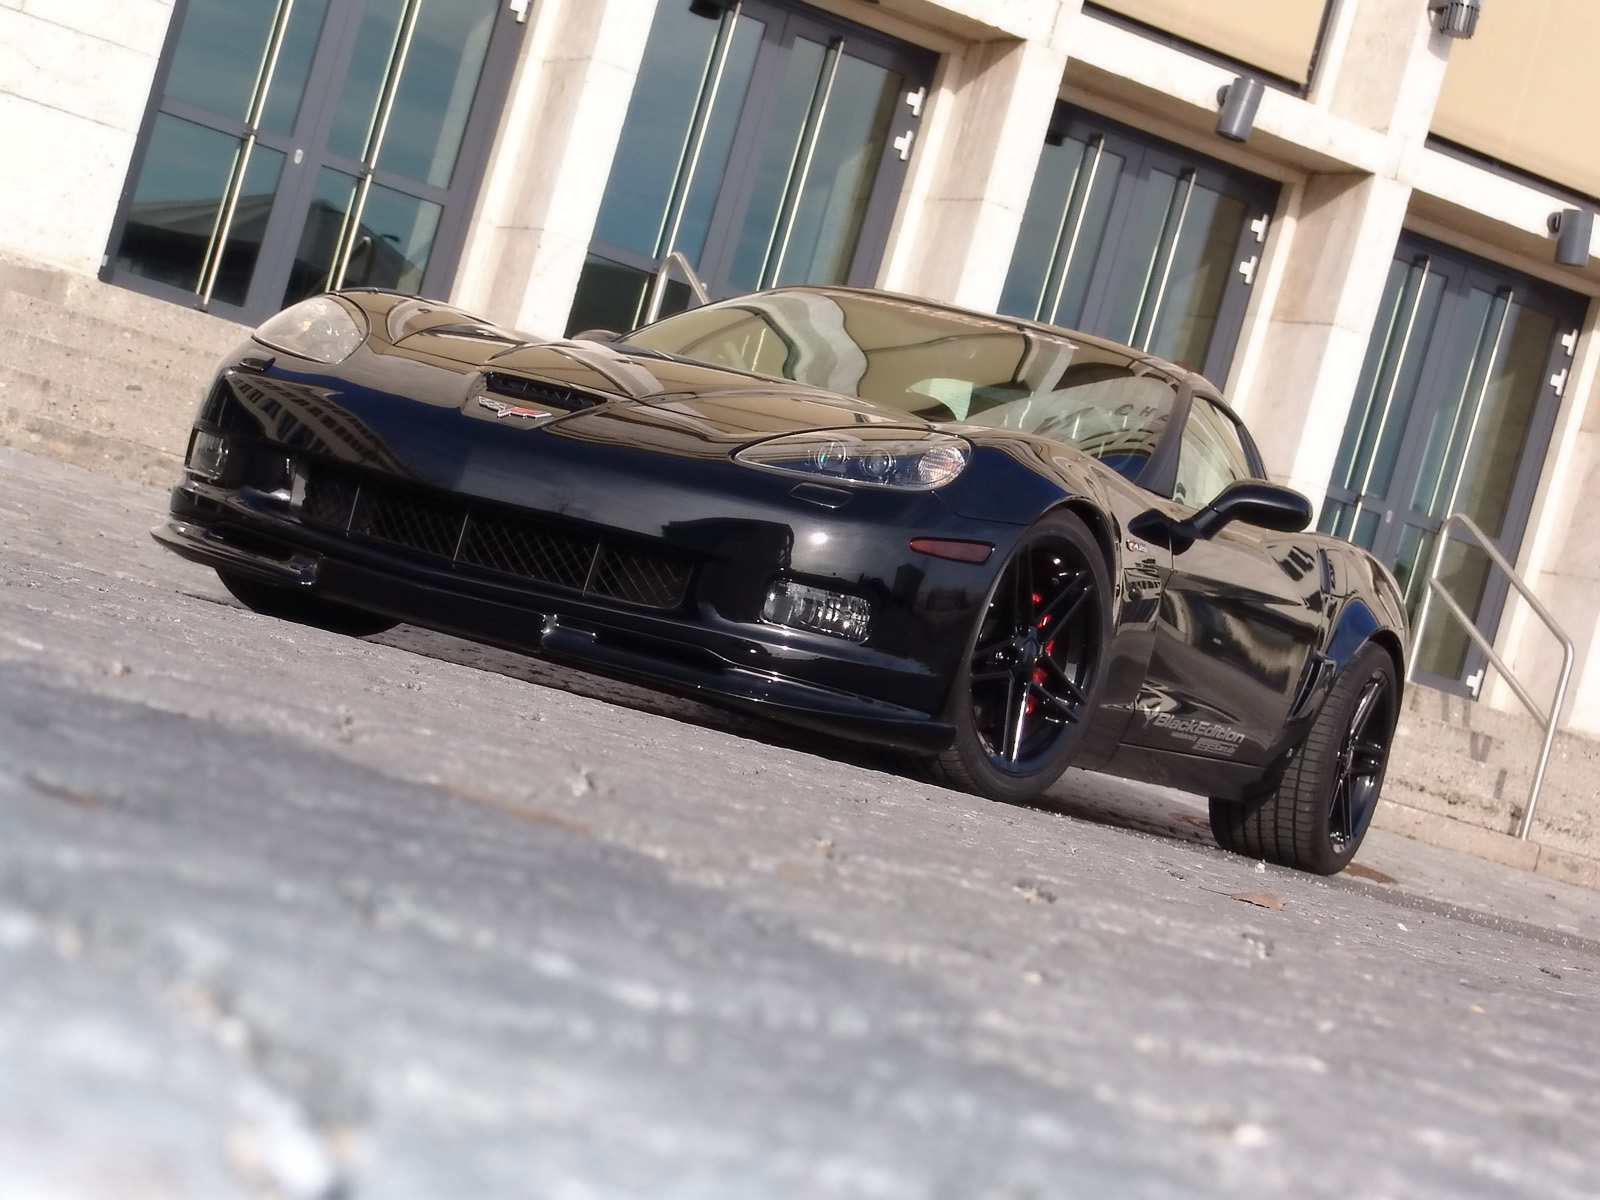 Black Chevrolet Corvette with sleek design and vibrant color, speeding on an open road.